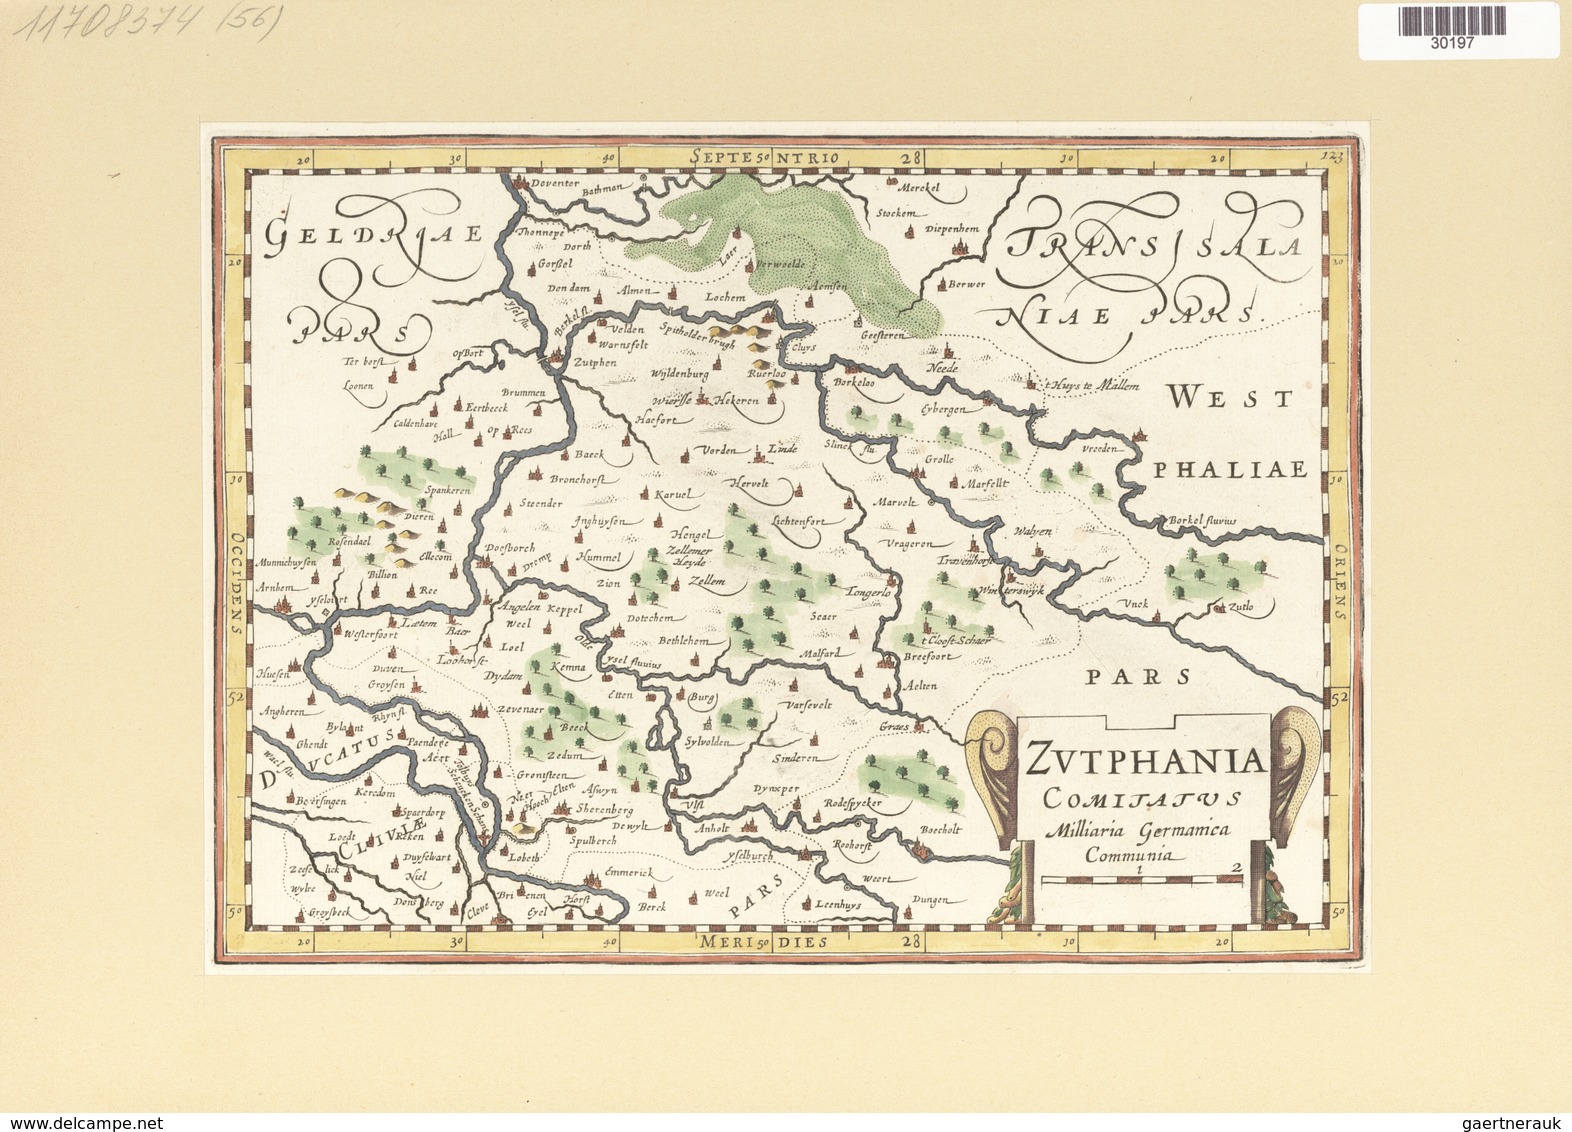 Landkarten Und Stiche: 1734. Zutphania Comitatus, By Gerardus Mercator Ca 1633, Published In His Atl - Géographie